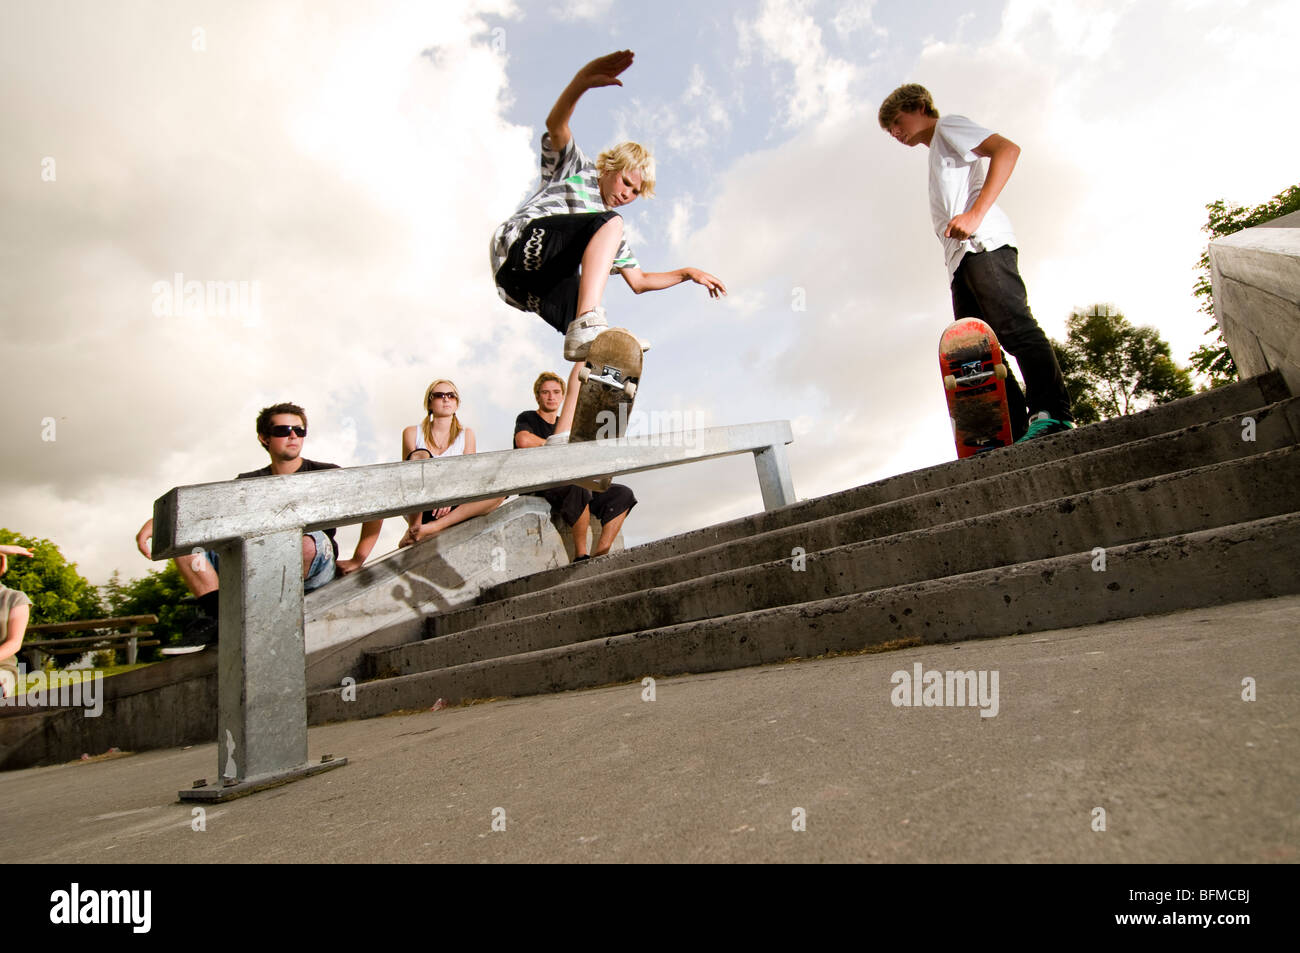 3 boys doing tricks in skate park with setting sun, Cambridge, New Zealand  Stock Photo - Alamy